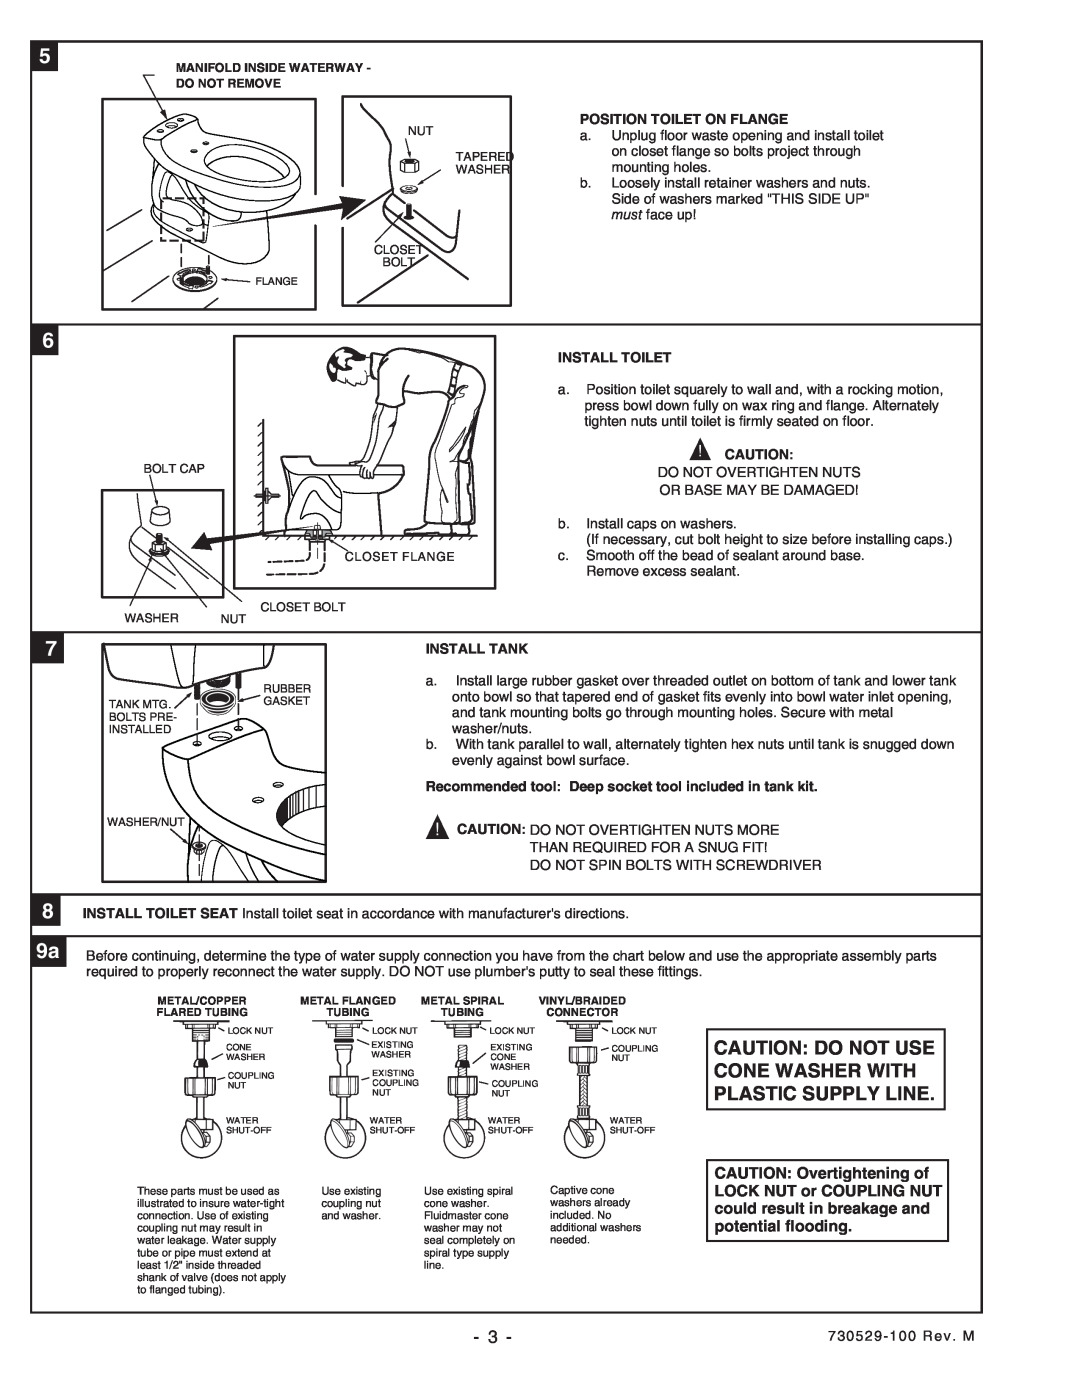 American Standard 2076, 2002 installation instructions Position Toilet On Flange, Install Toilet, Install Tank 